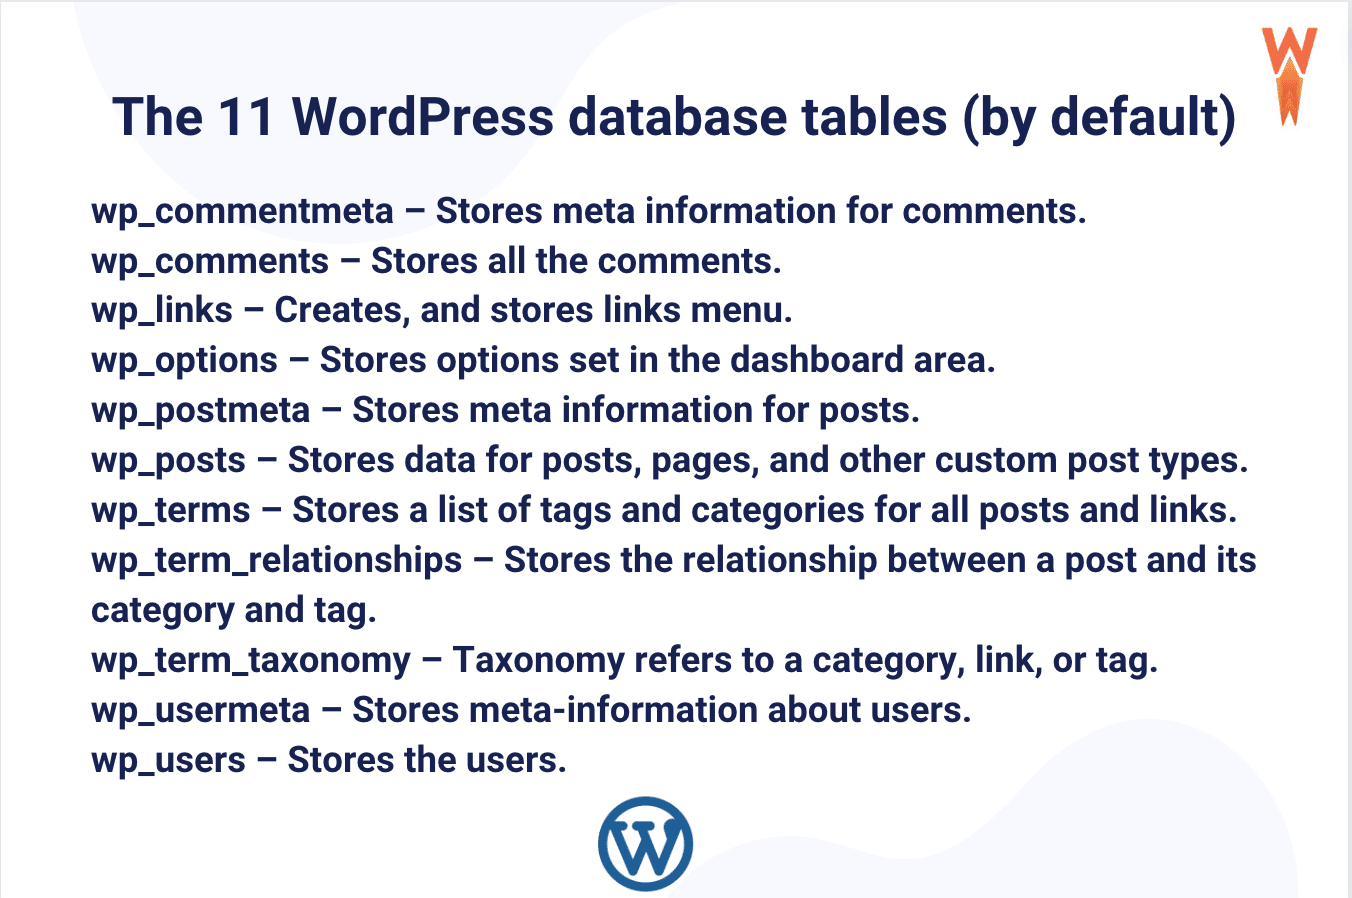 WordPress database tables by default - Source: WP Rocket